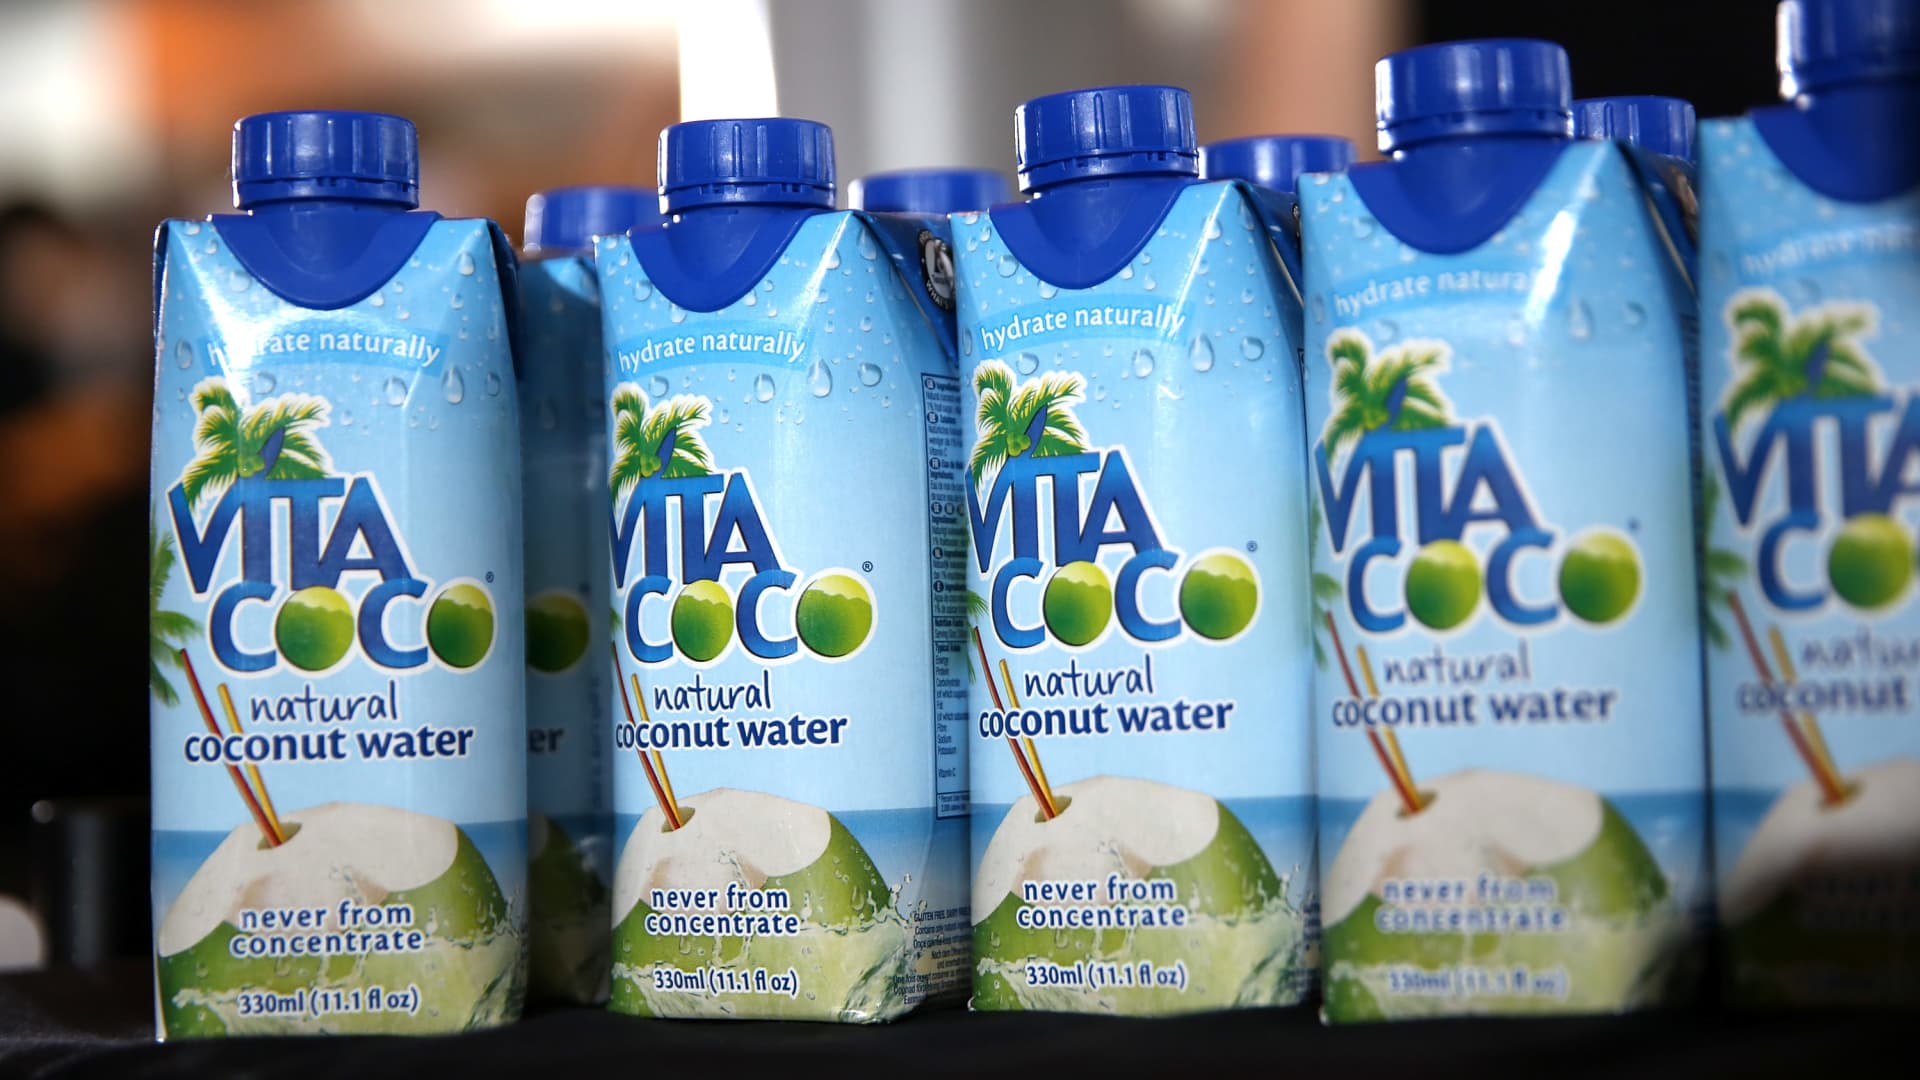 BofA upgrades beverage company Vita Coco, citing declining ocean freight costs